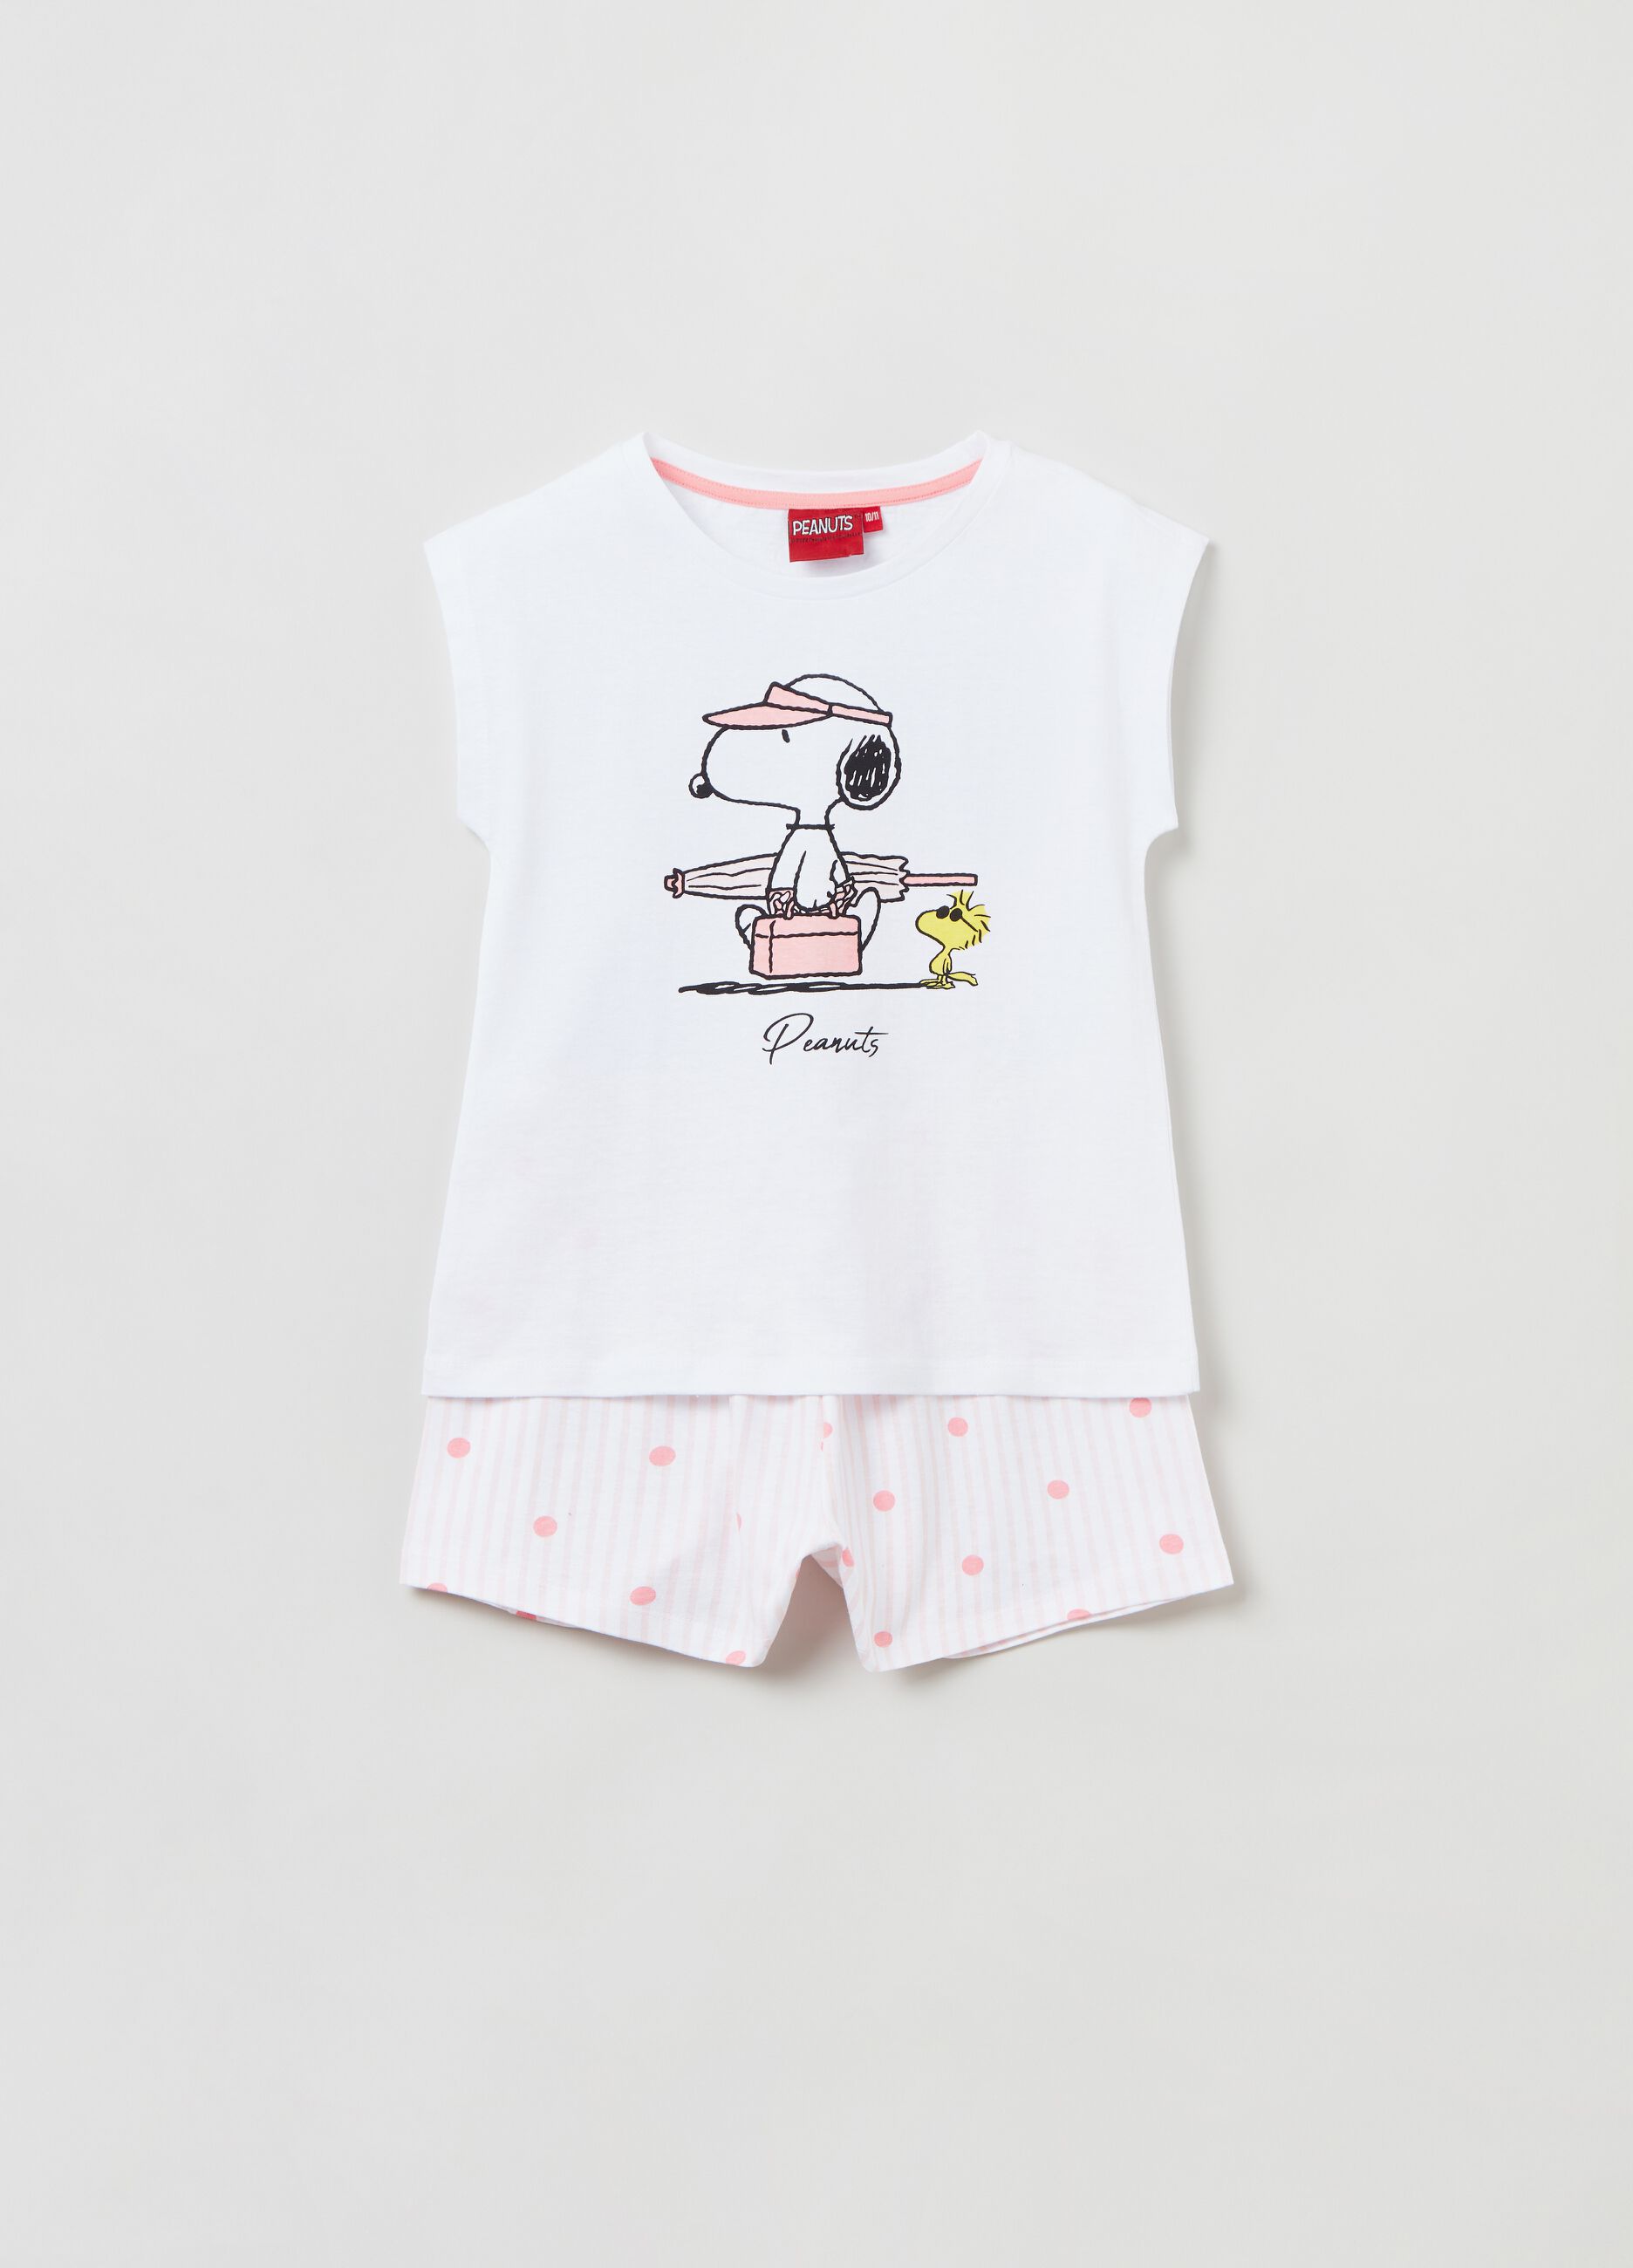 Short pyjamas with Peanuts print